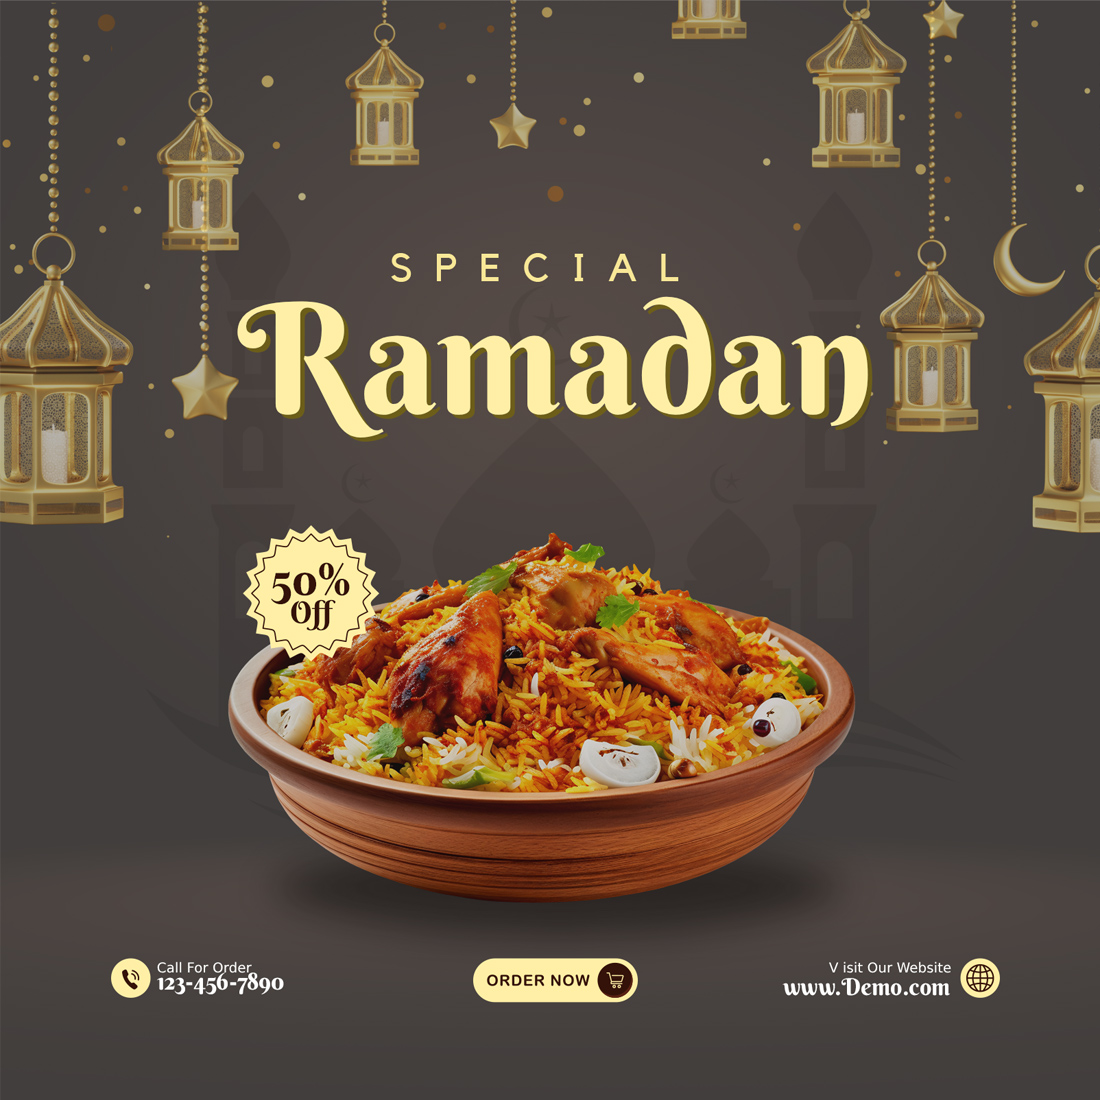 Ramadan Sale Social Media Post preview image.